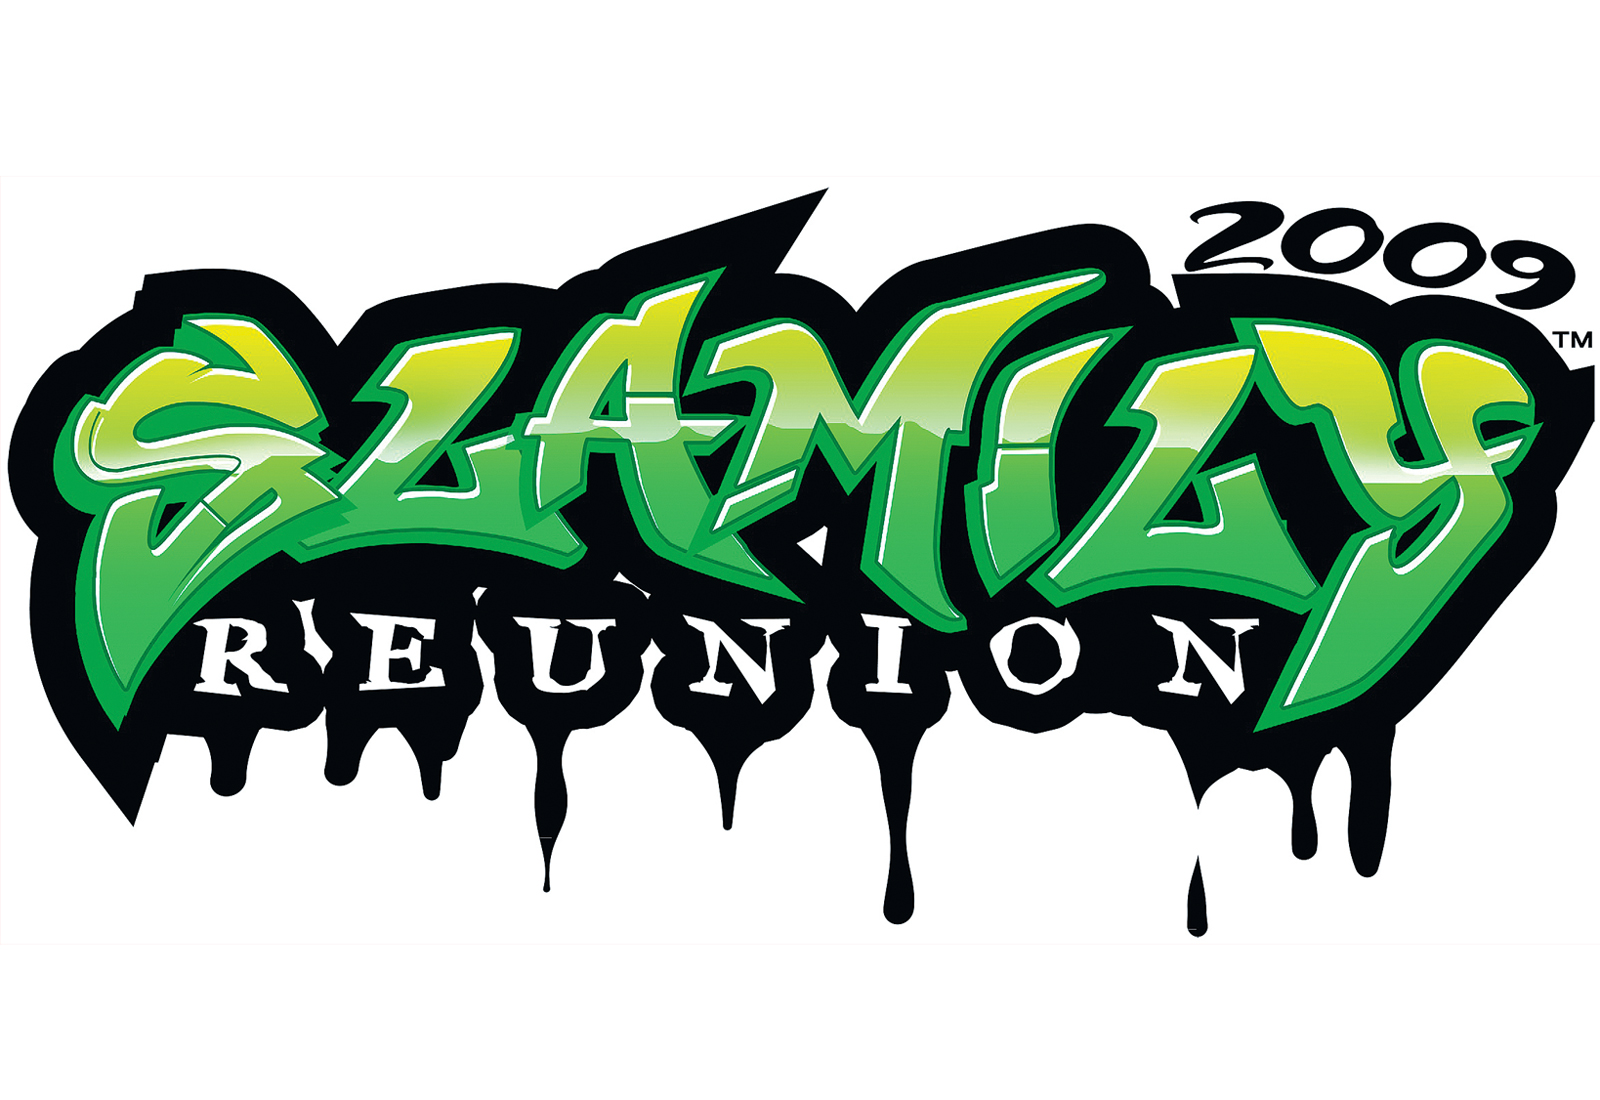 Slamily Reunion 2009 Logo Photo 1